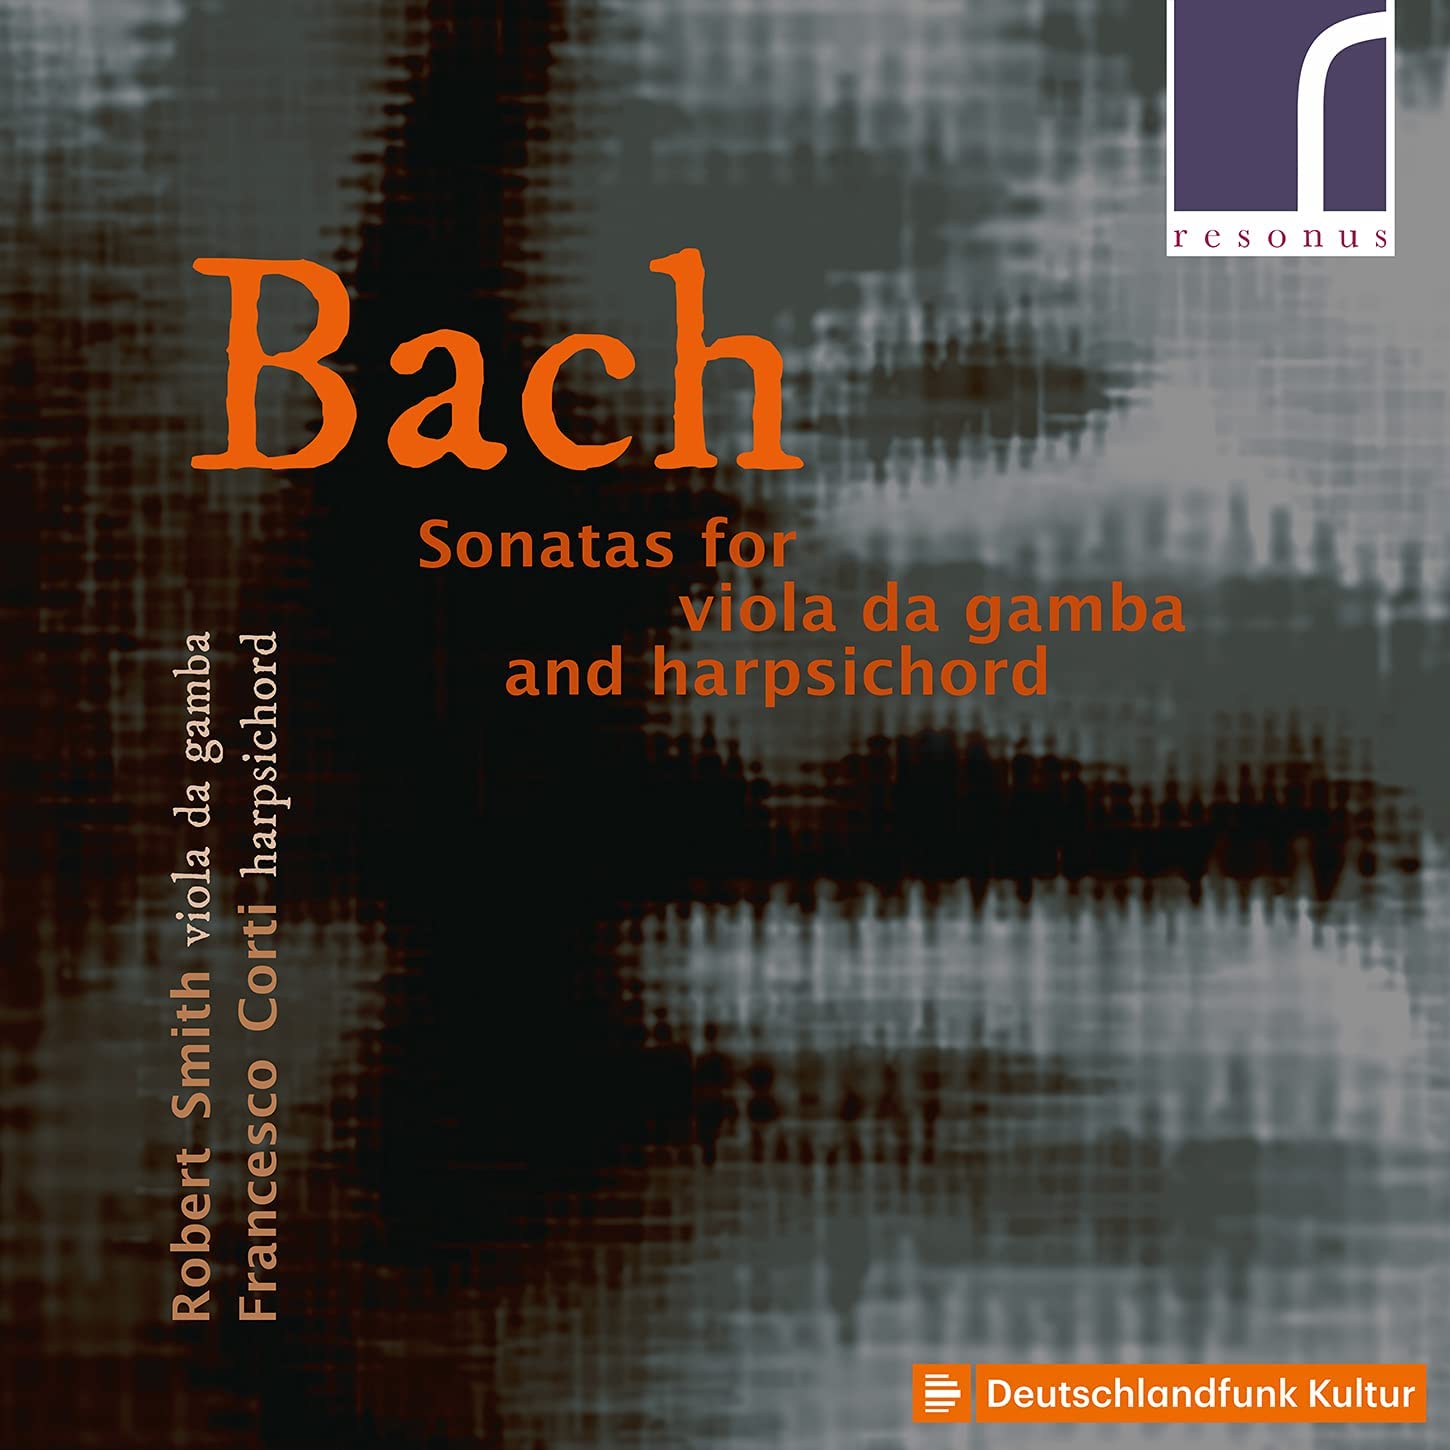 CD cover Bach Sonatas for viola da gamba and harpsichord Robert Smith Francesco Corti